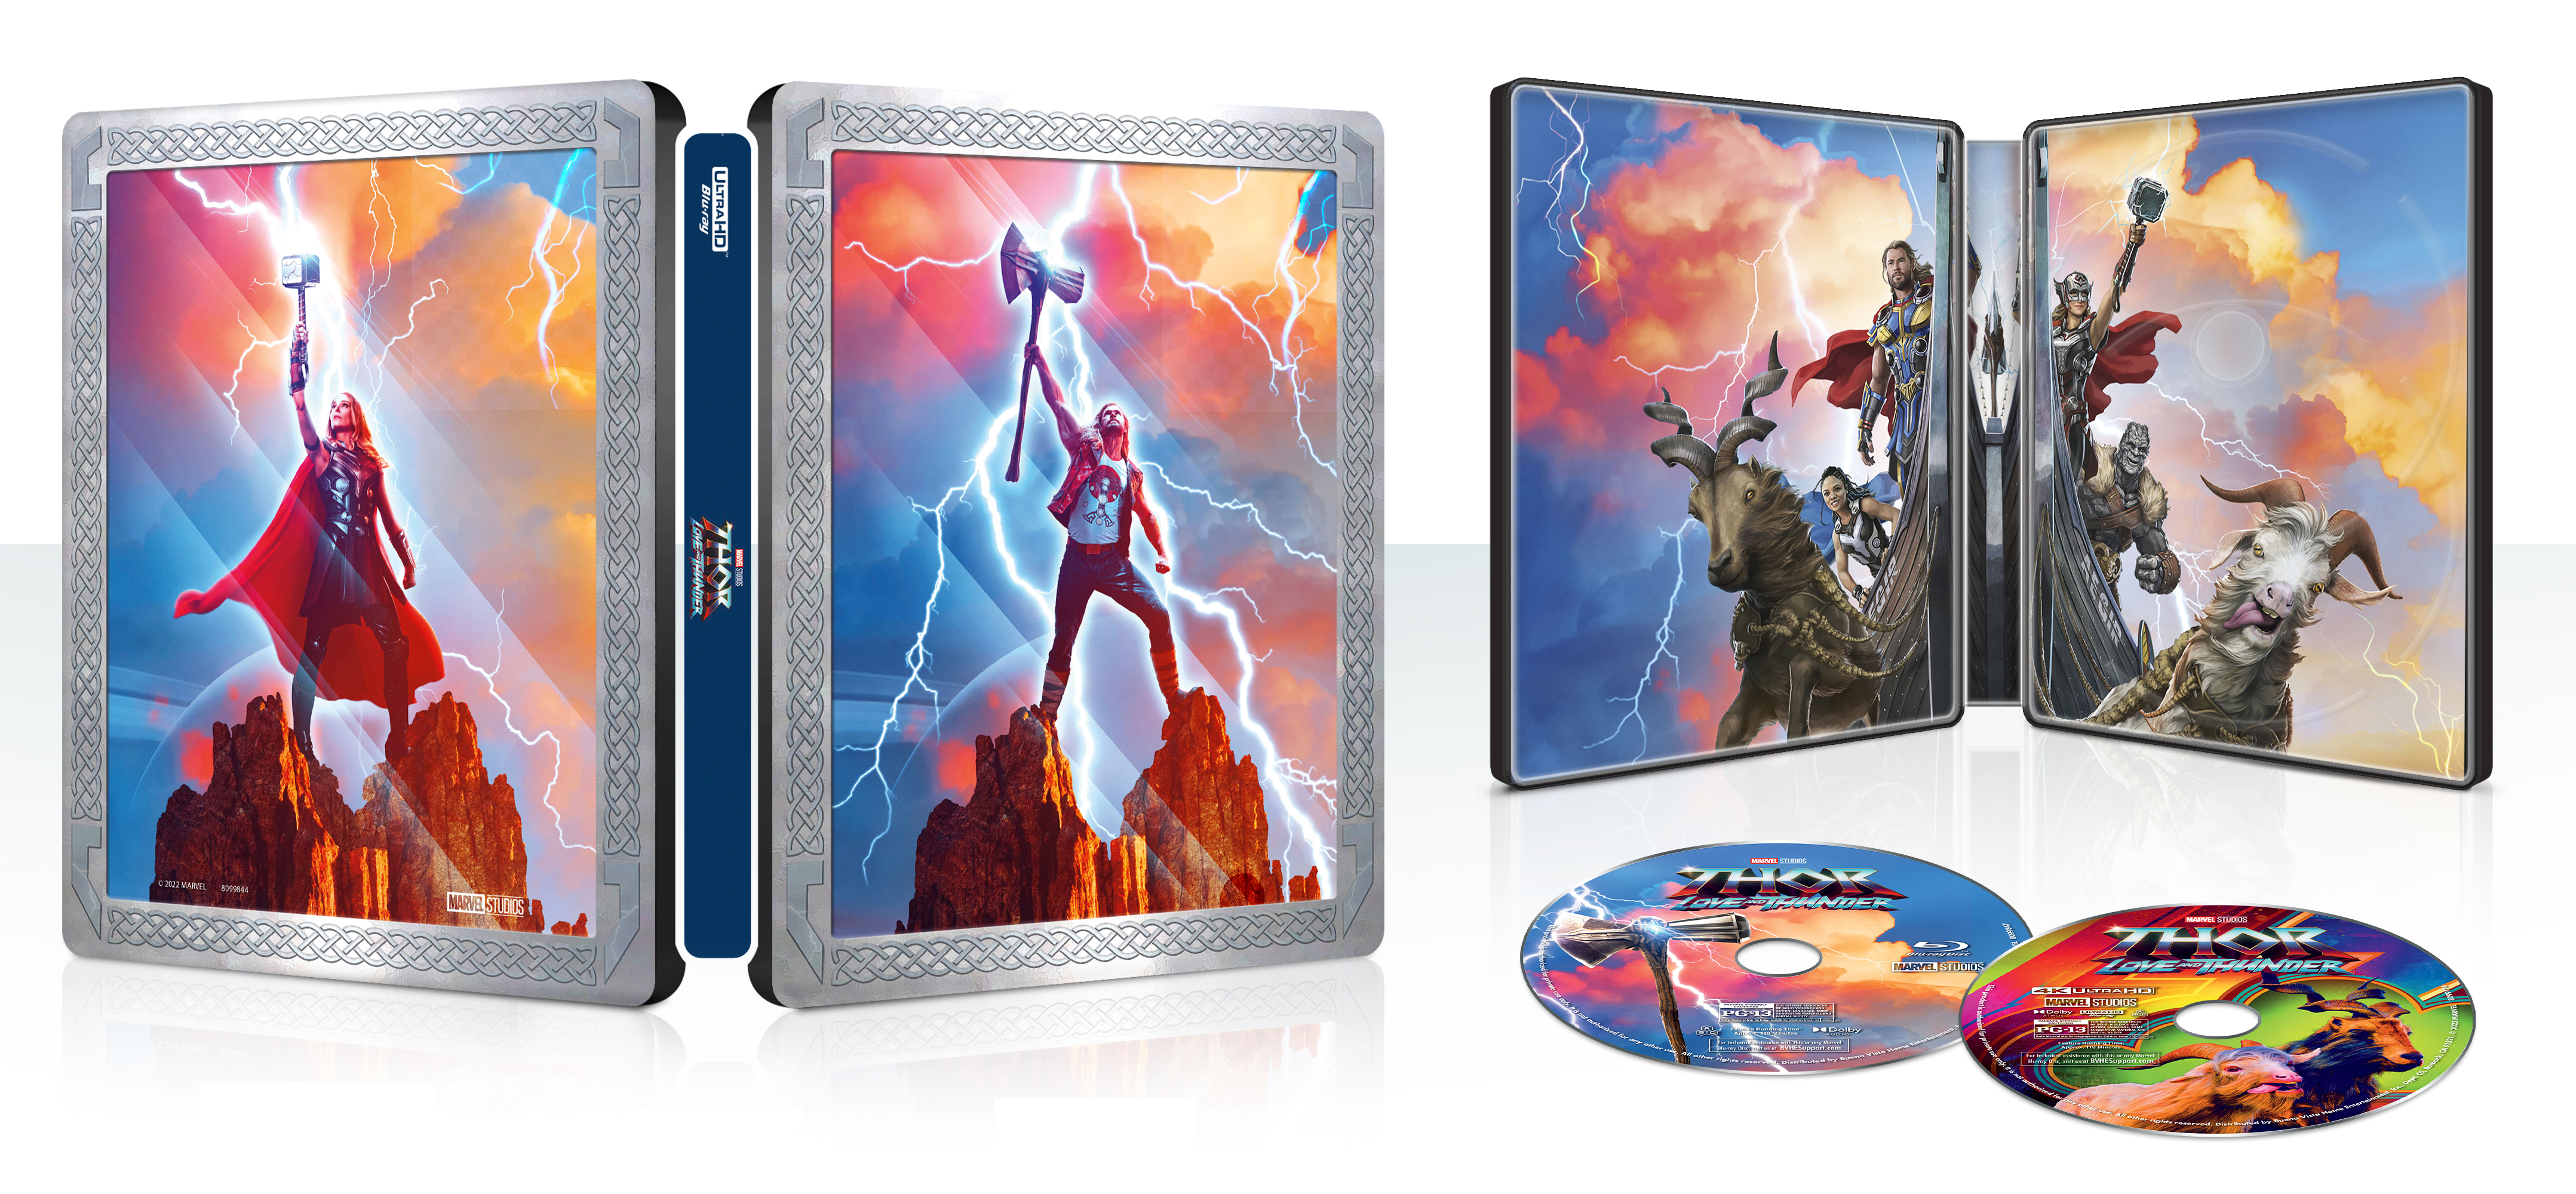 Thor: Love and Thunder [SteelBook] [Digital Copy] [4K Ultra HD Blu-ray/Blu- ray] [Only @ Best Buy] [2022] - Best Buy